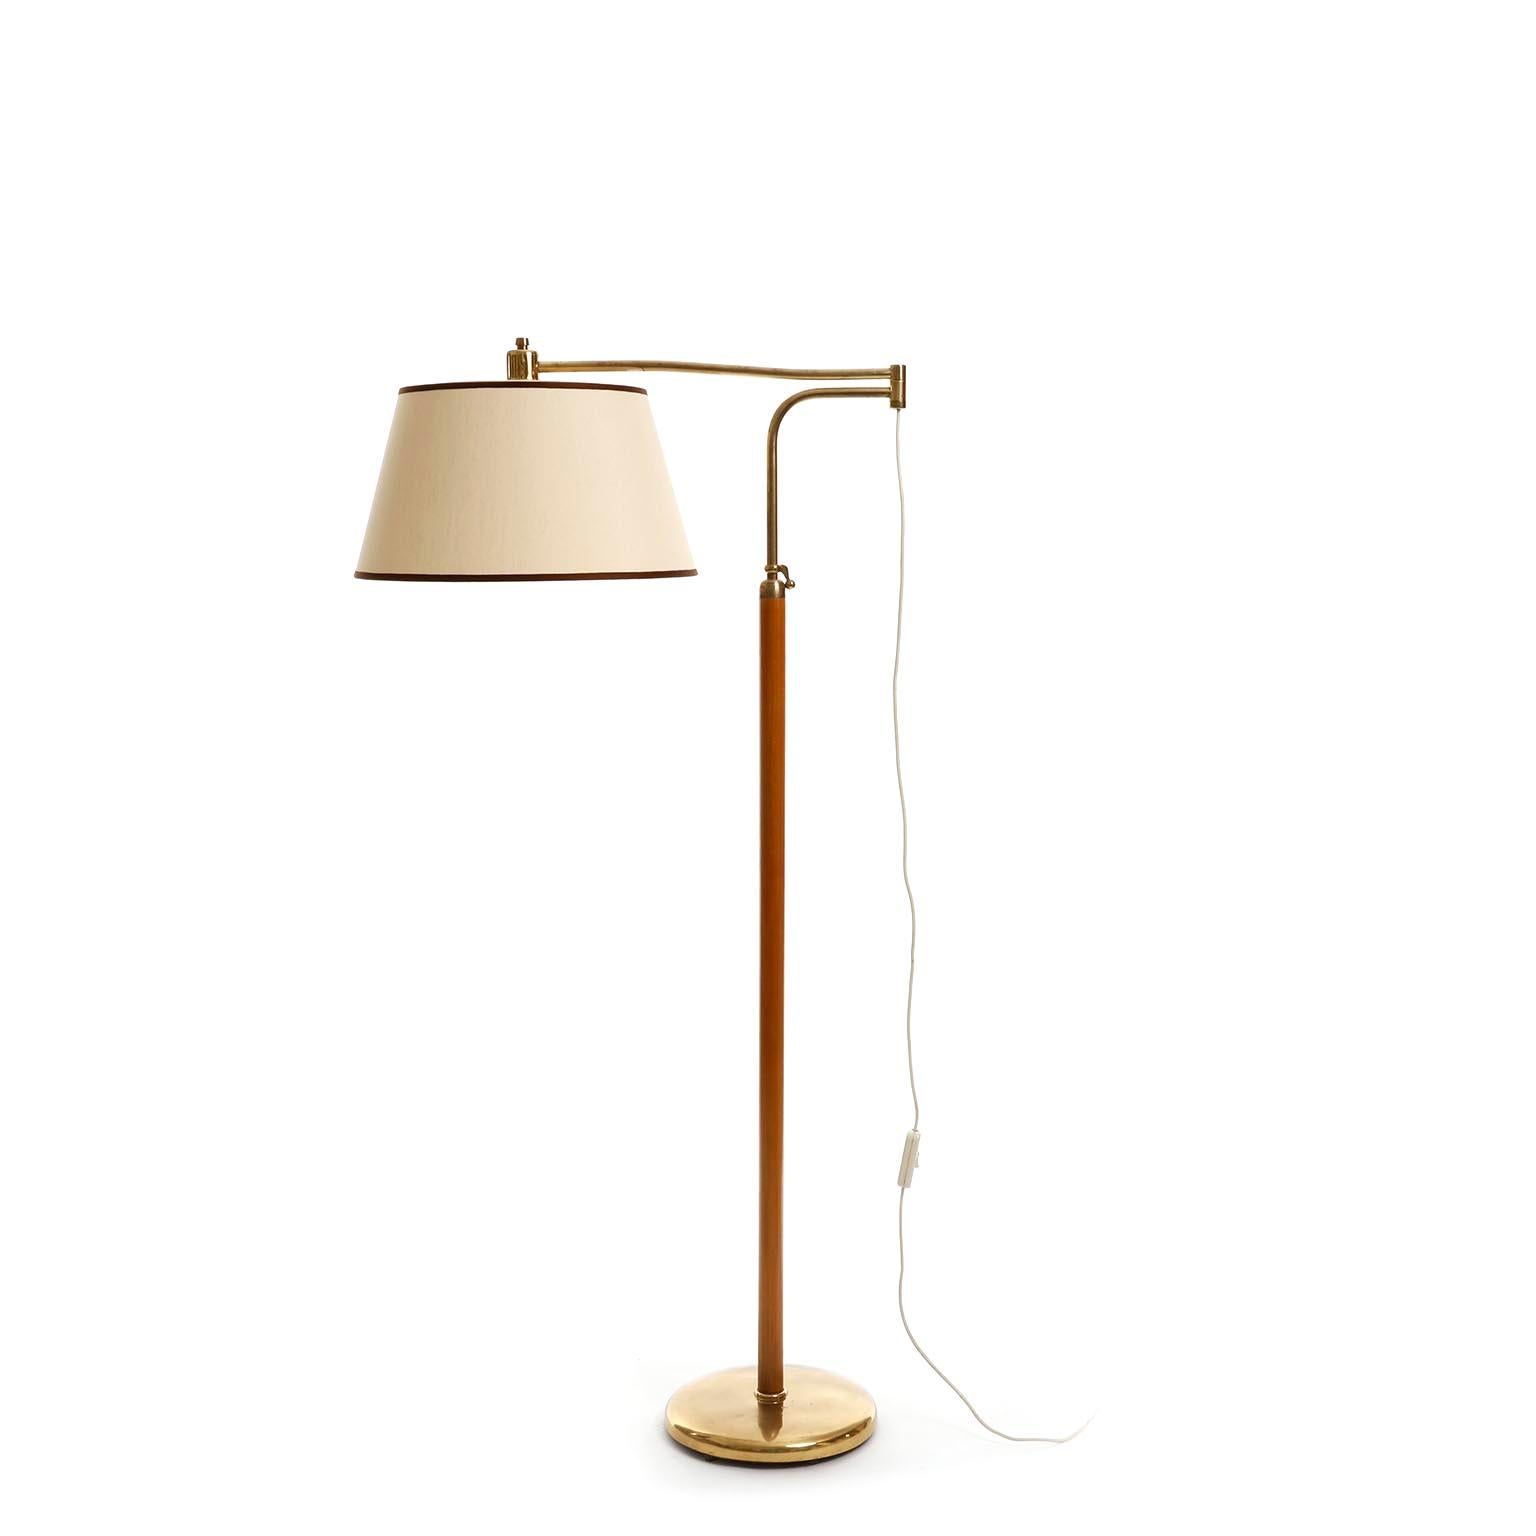 Austrian Josef Frank Adjustable Floor Lamp 'Neolift' by J.T. Kalmar, Brass Wood, 1950s For Sale